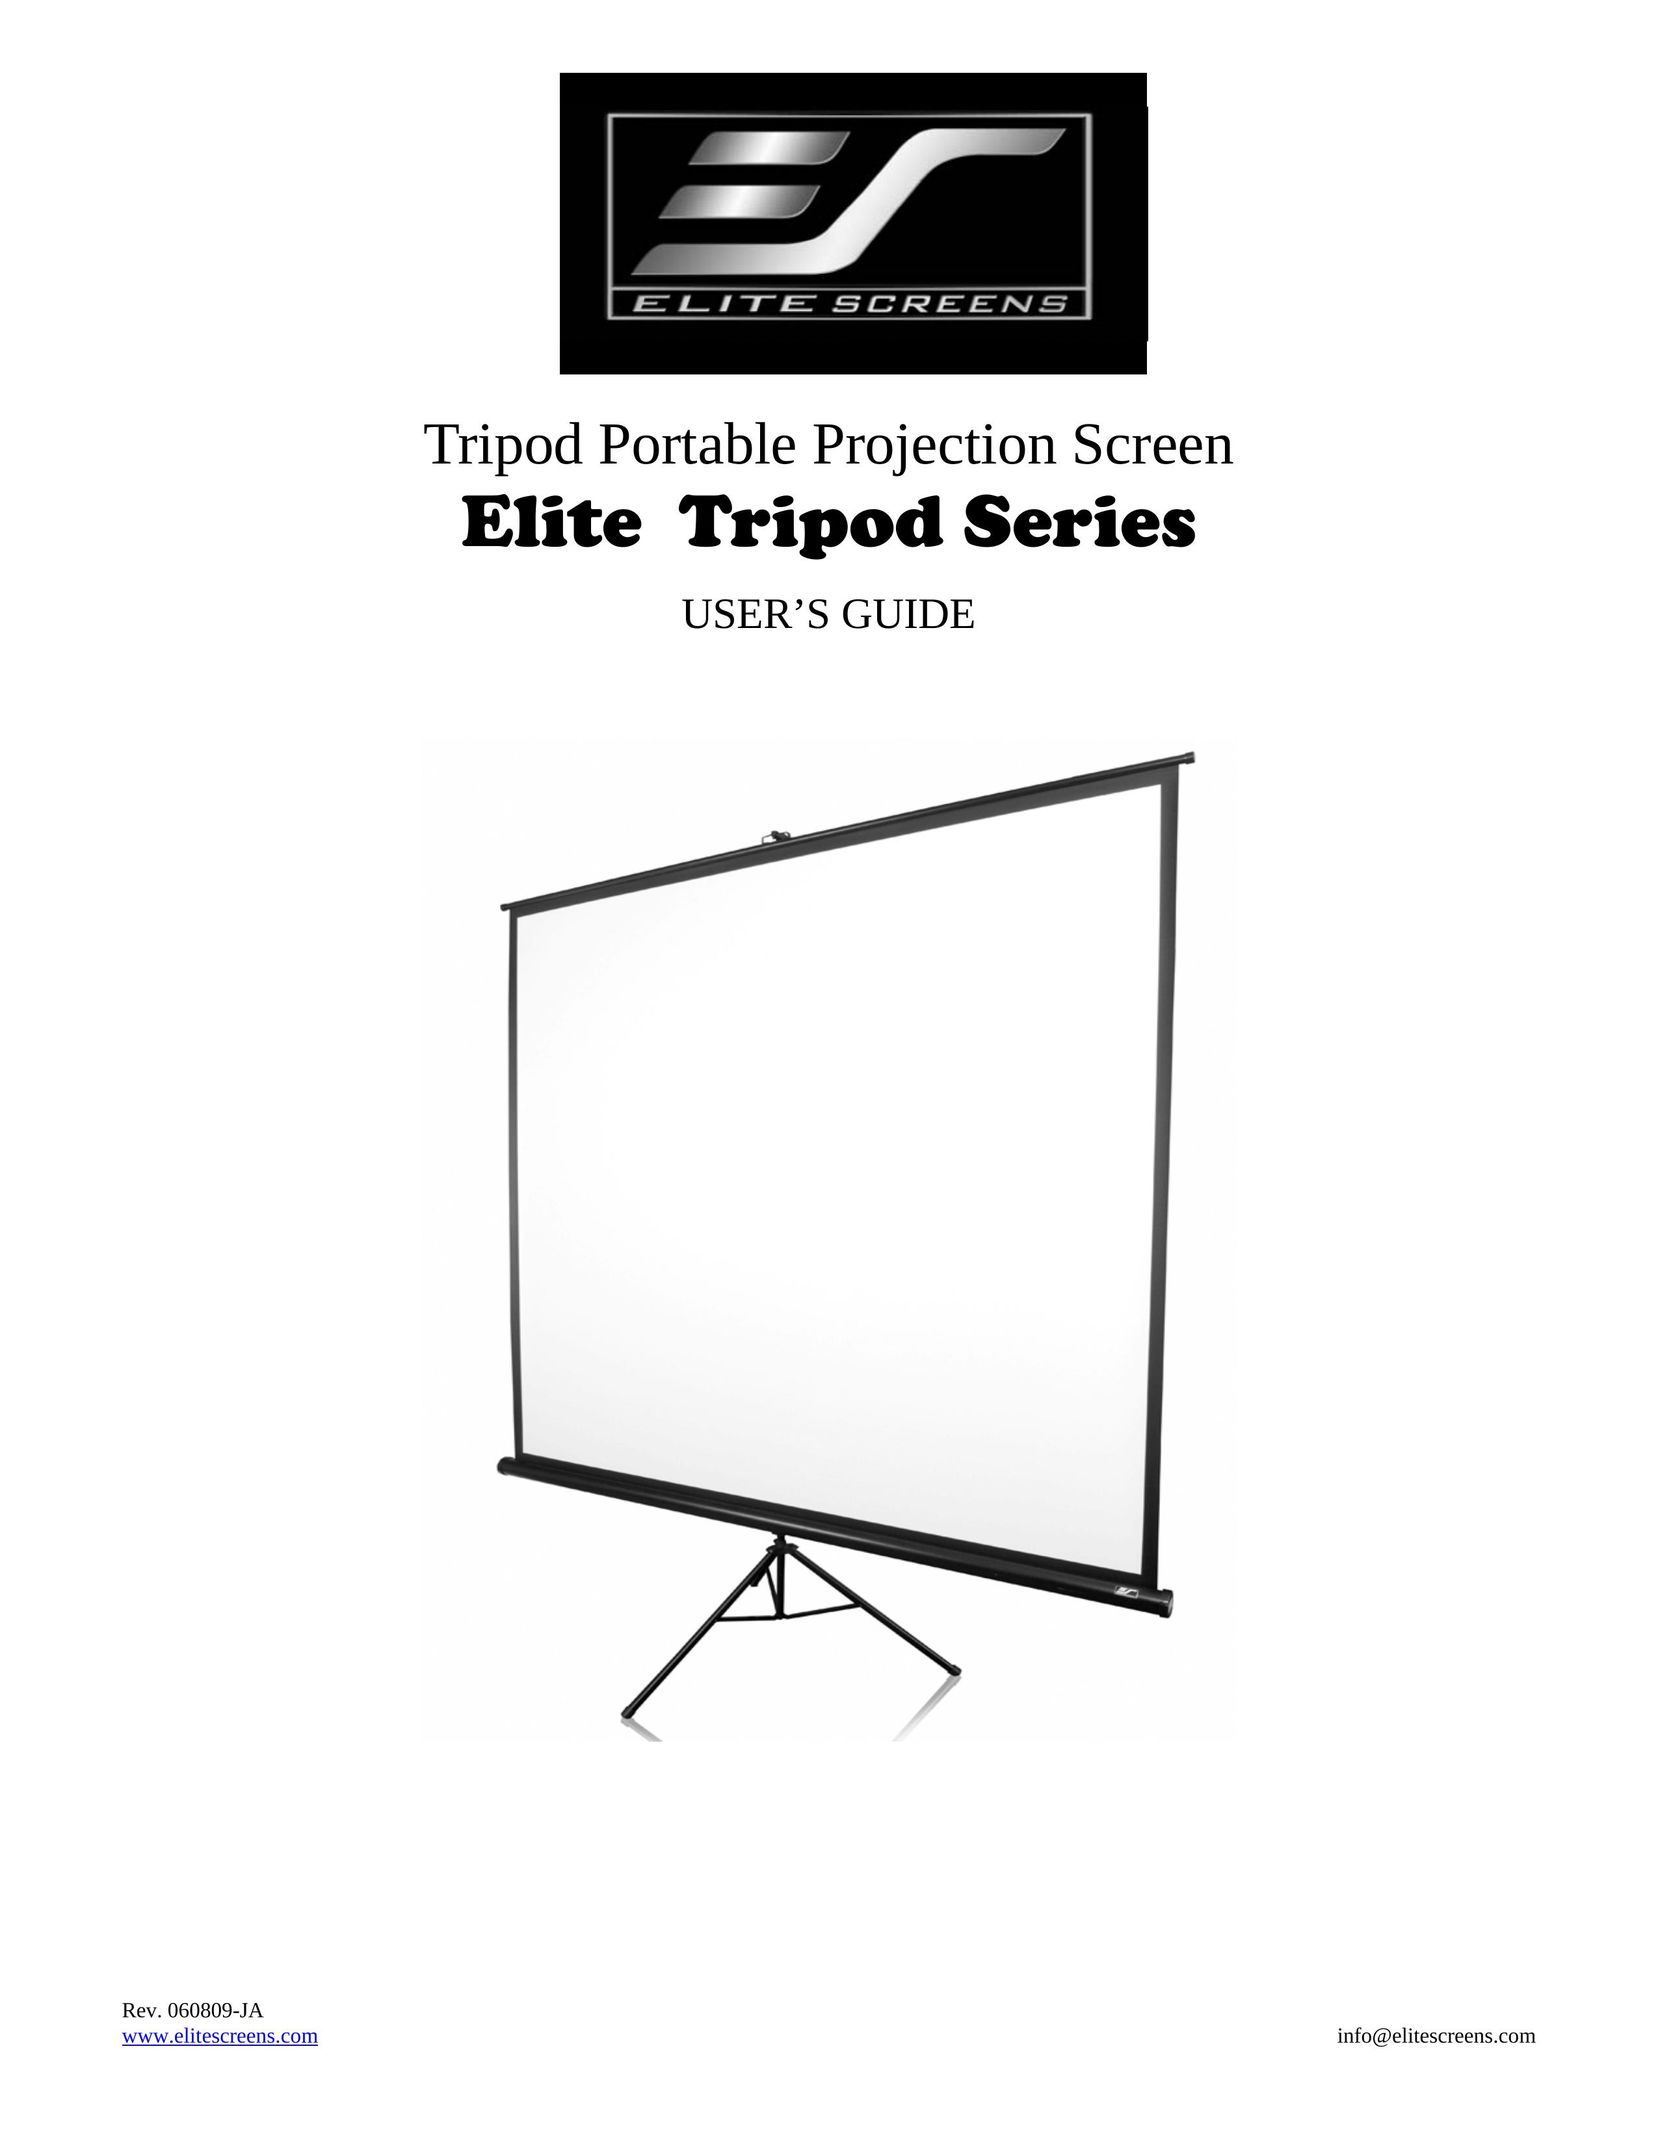 Elite Screens Elite Tripod Projector Accessories User Manual